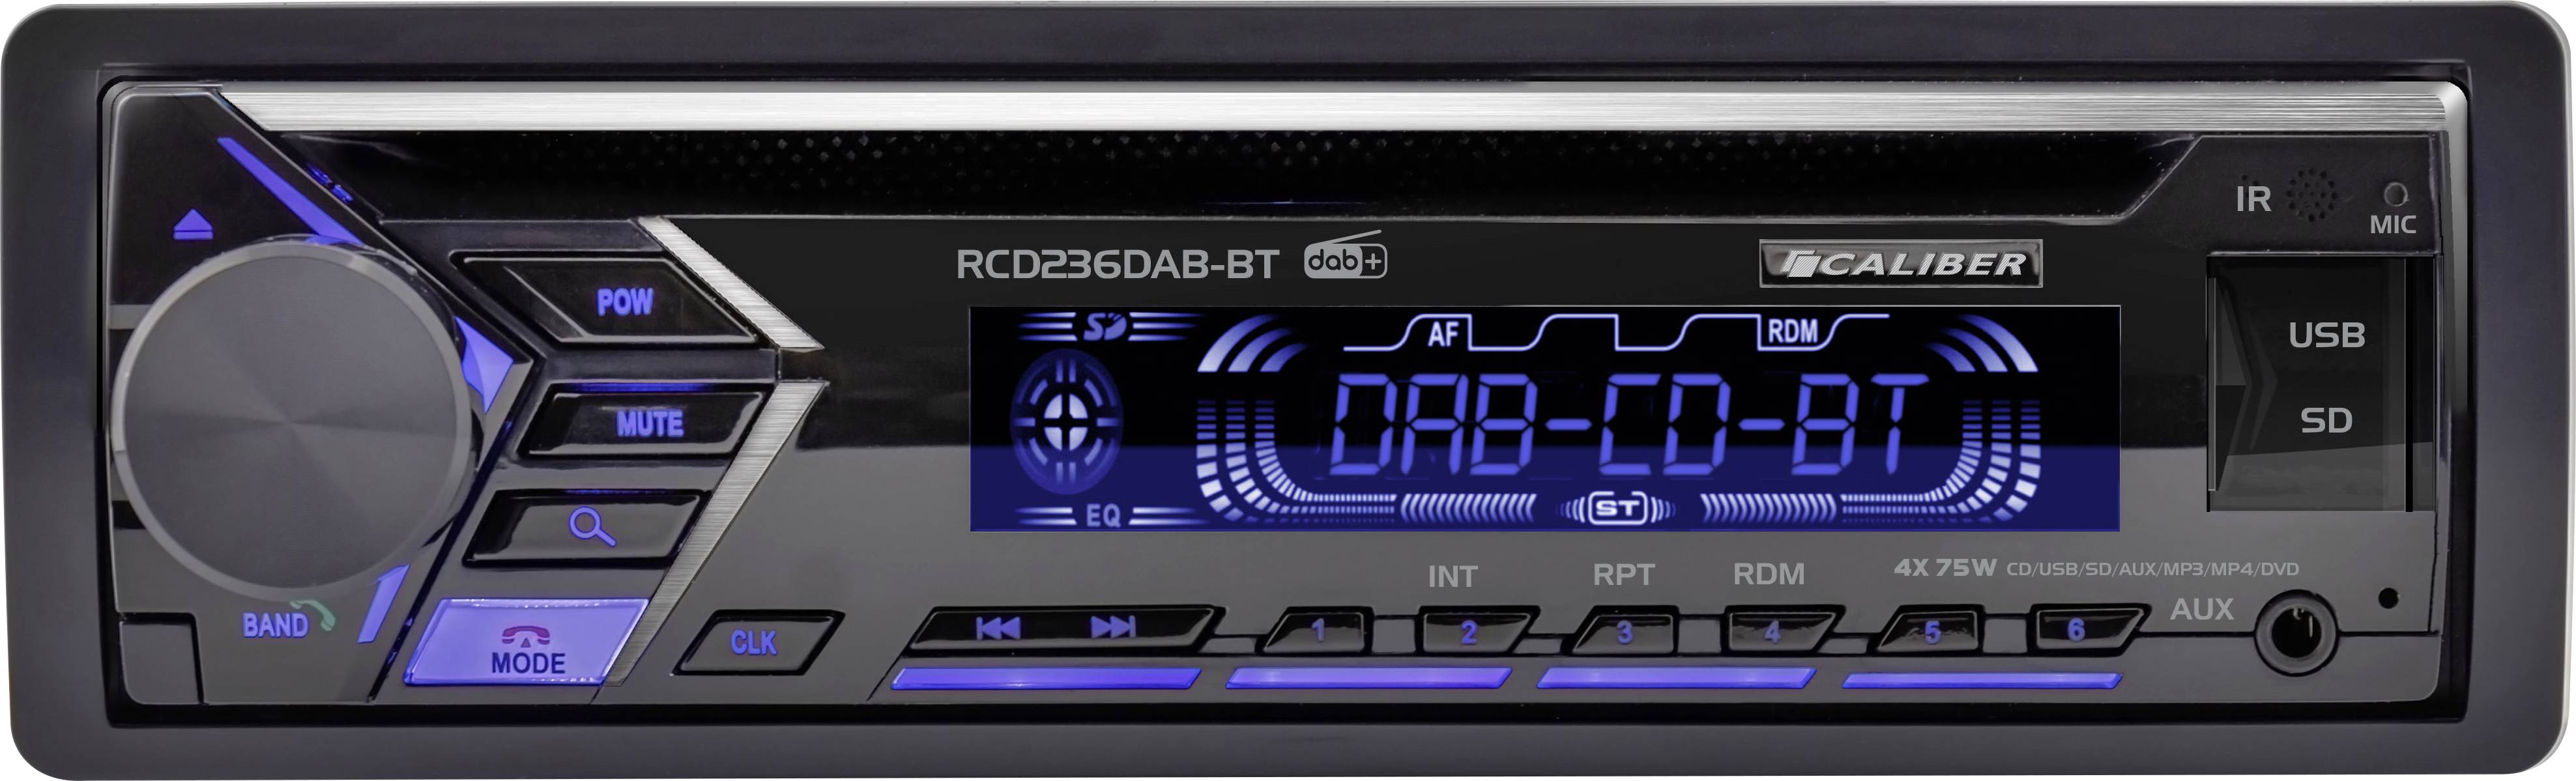 Caliber RCD236DAB-BT Autoradio kit mains libres bluetooth, tuner